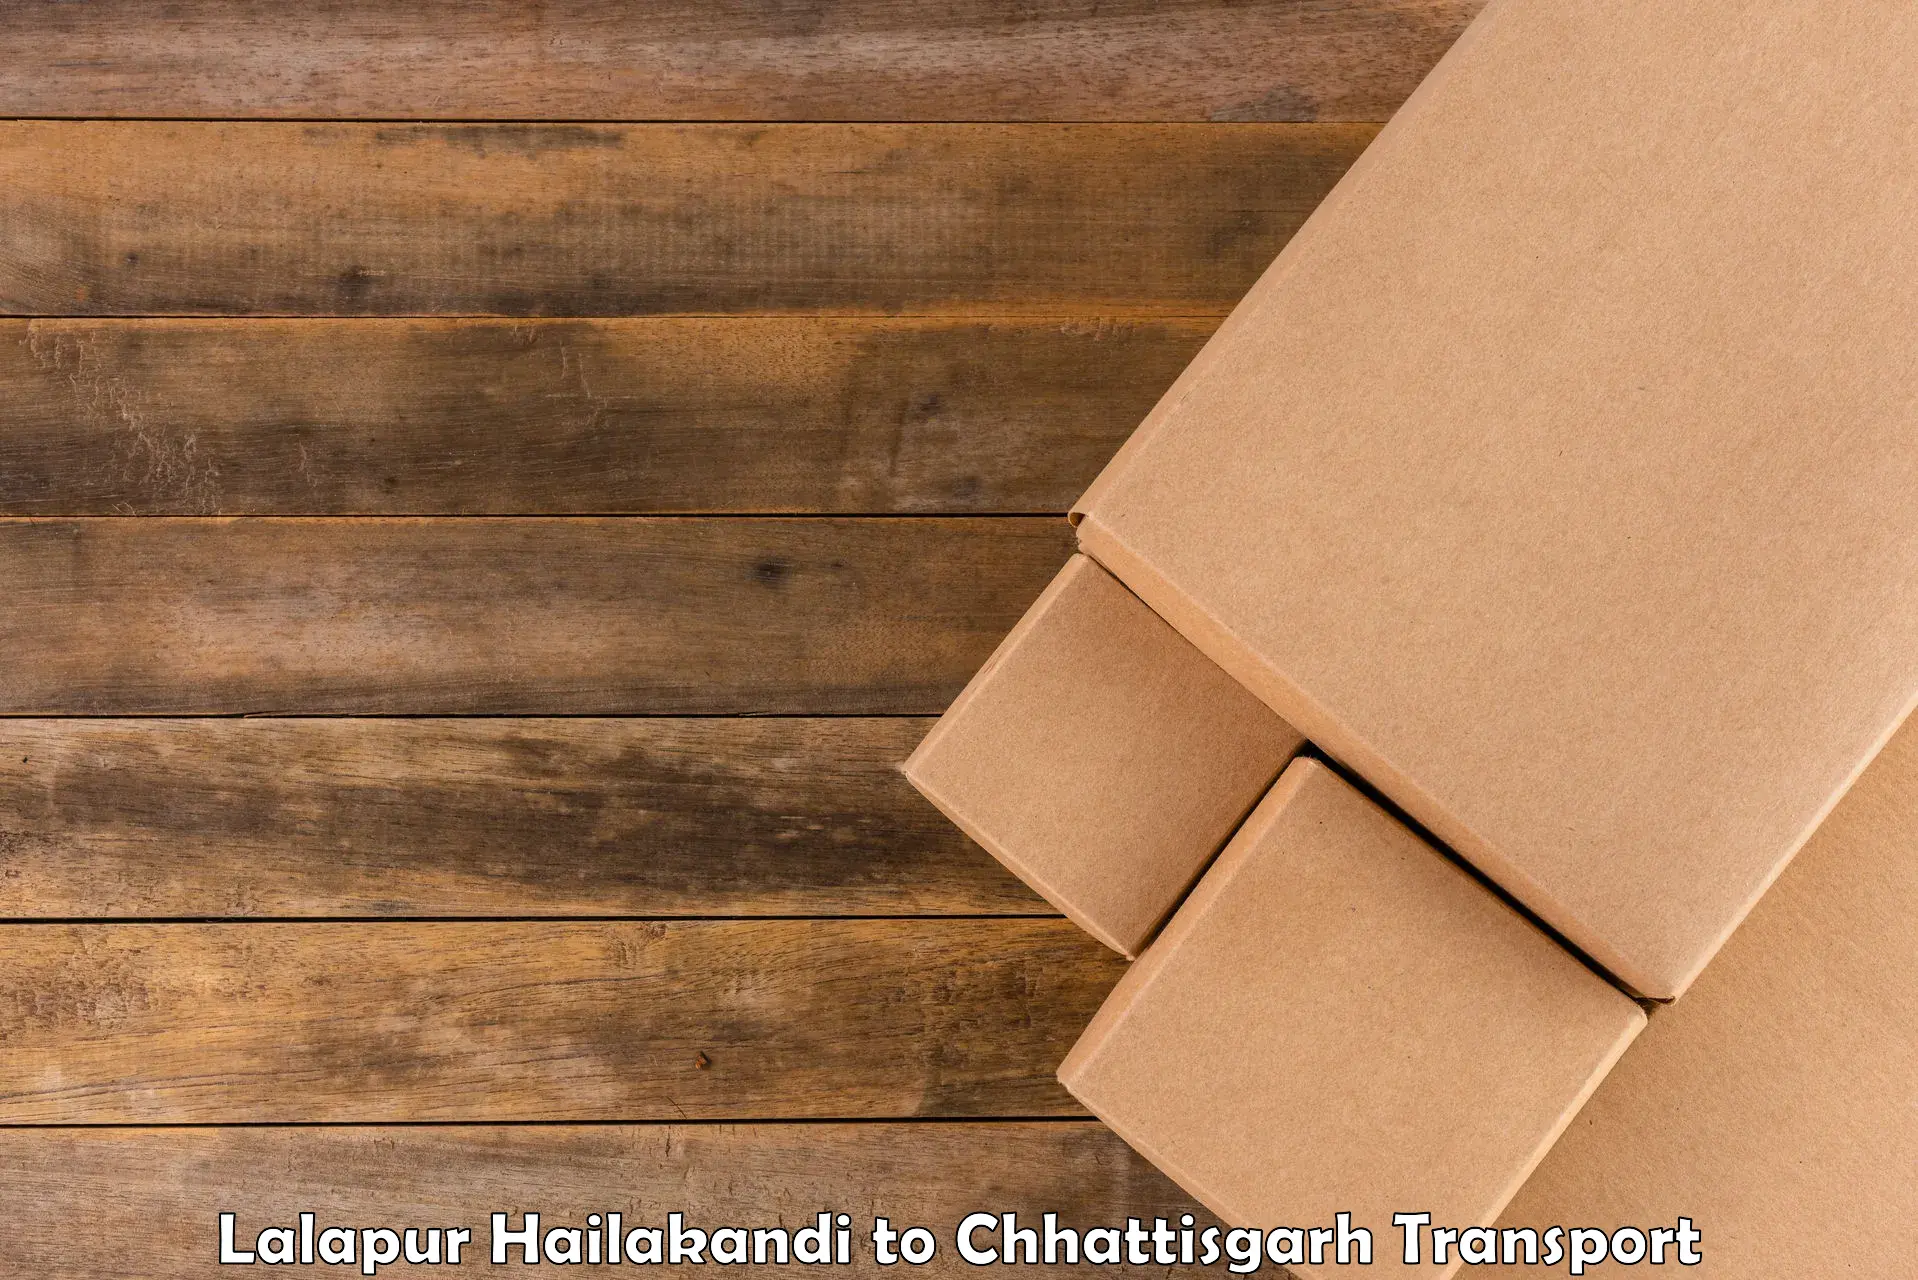 Lorry transport service Lalapur Hailakandi to Raigarh Chhattisgarh